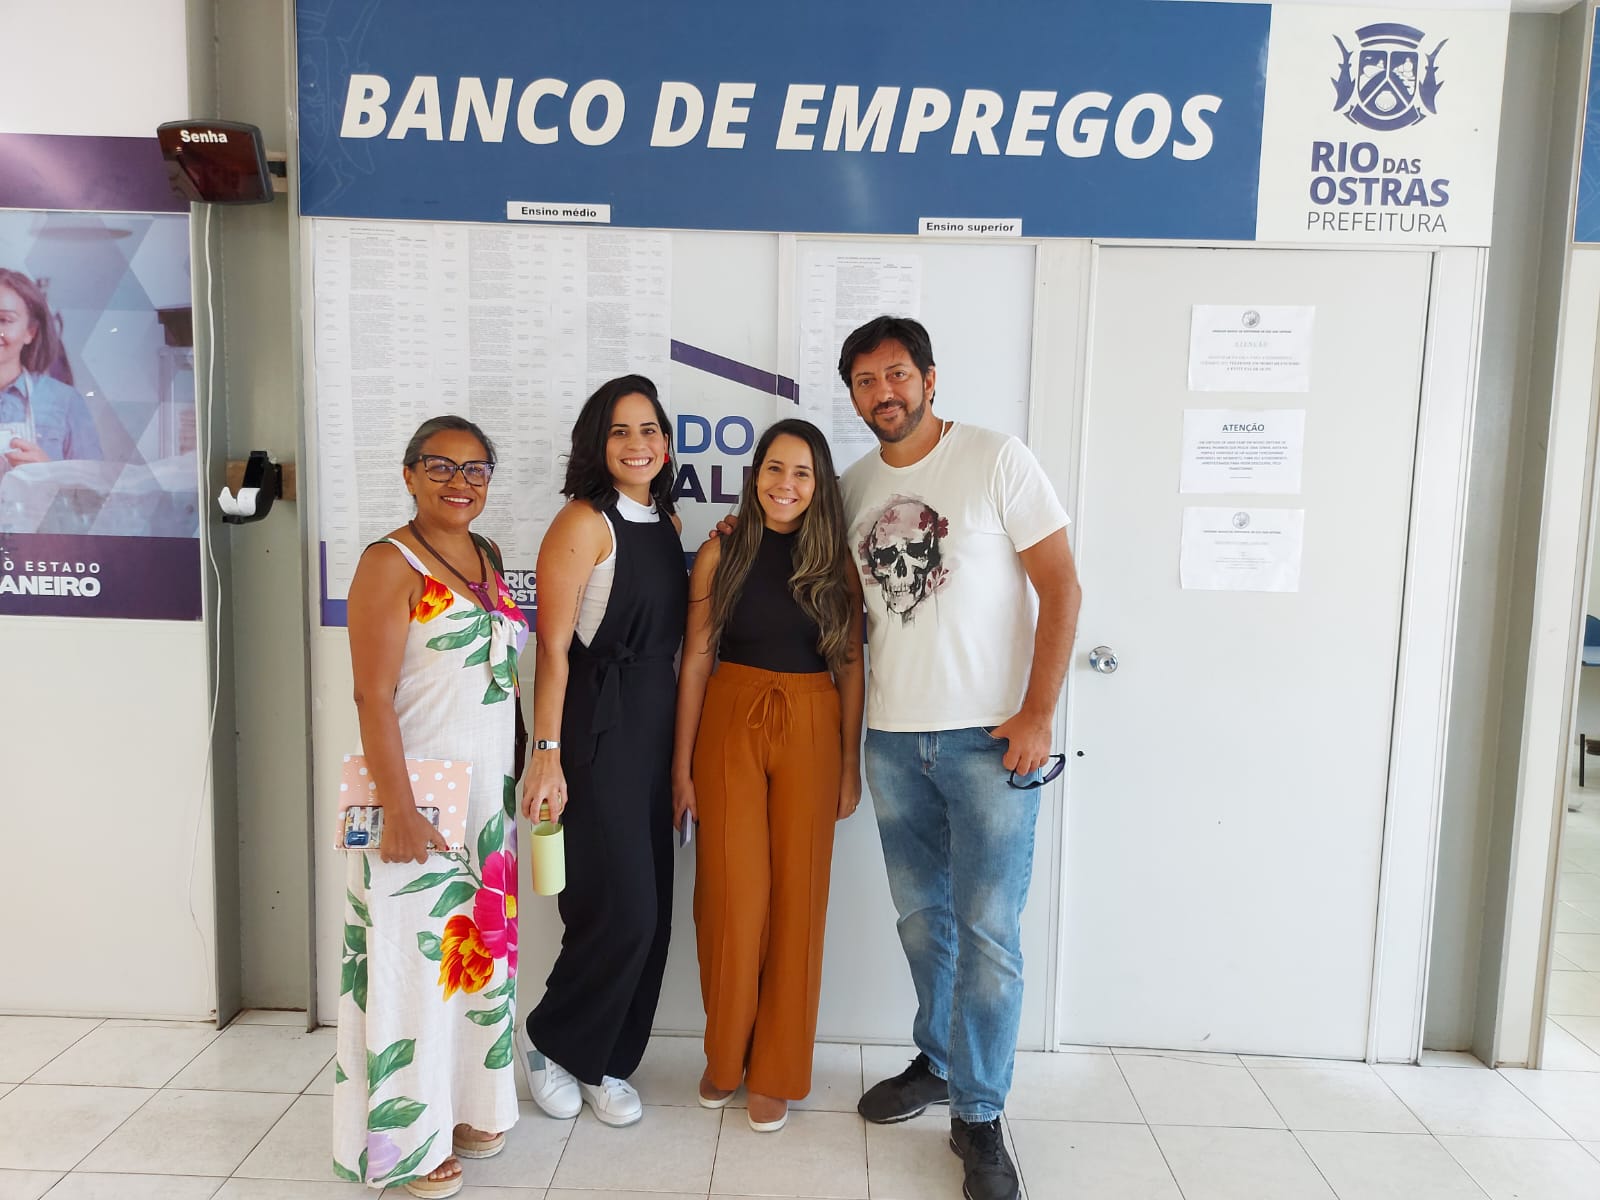 Banco de Empregos de Rio das Ostras oferece 518 vagas